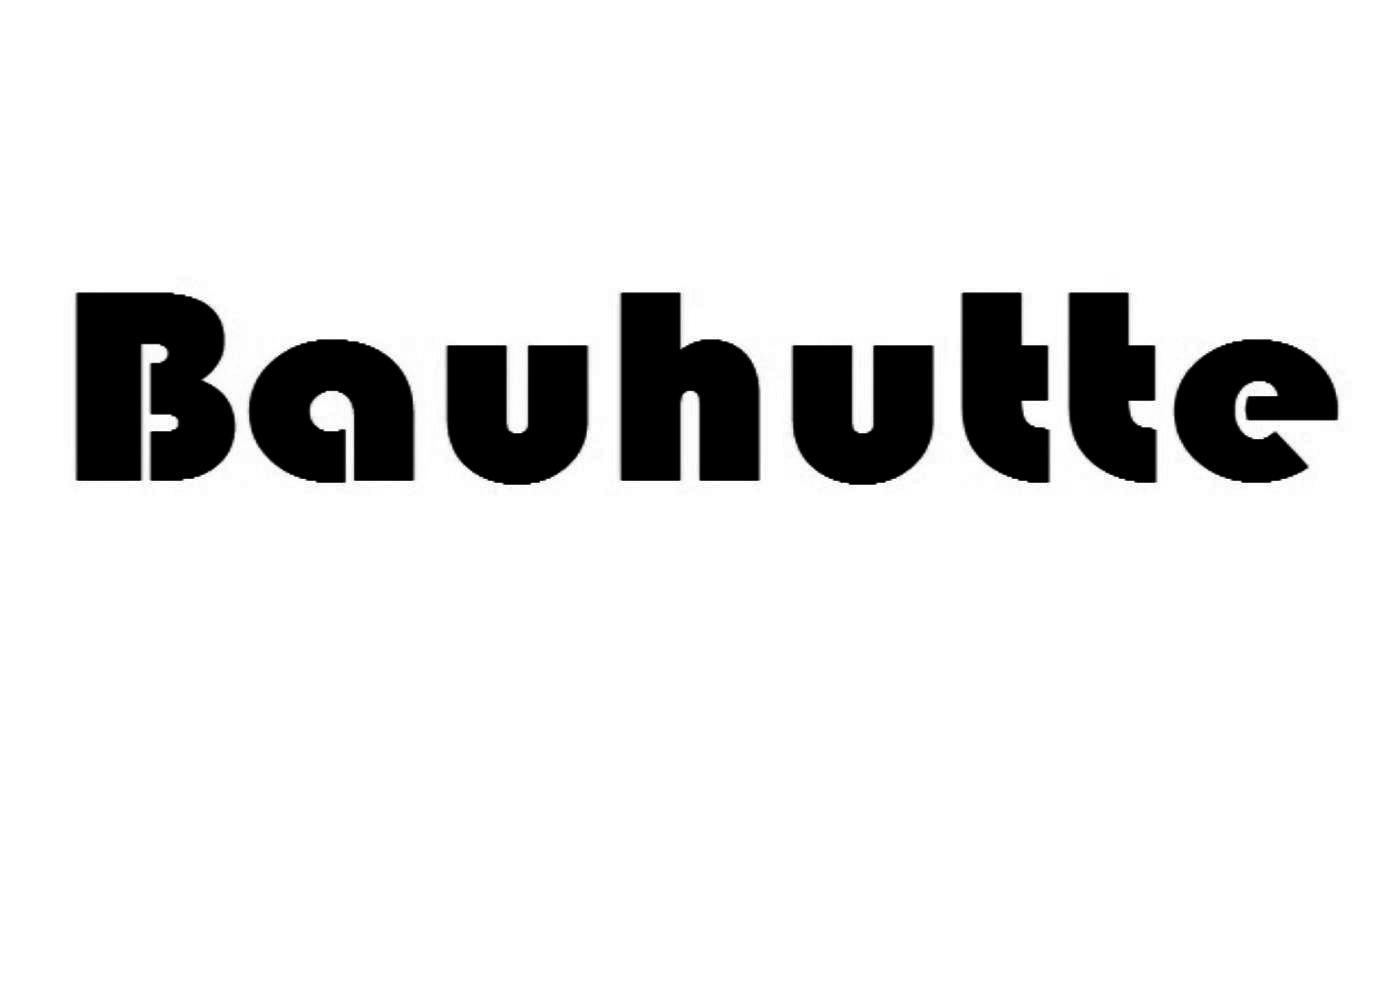 BAUHUTTE商标转让